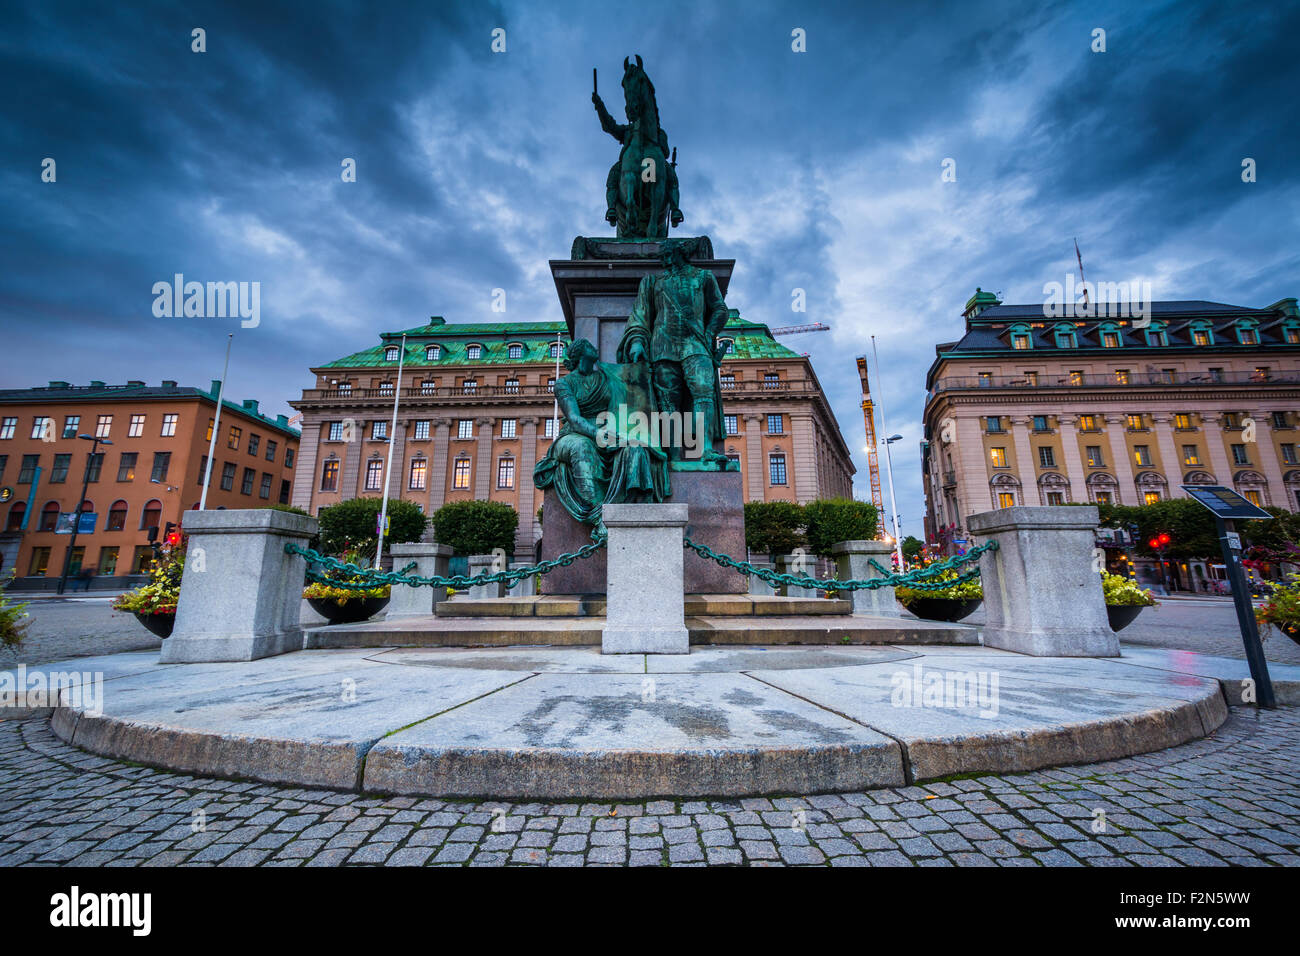 Statue of King Gustav II Adolf at Gustav Adolf's torg in Norrmalm, Stockholm, Sweden. Stock Photo